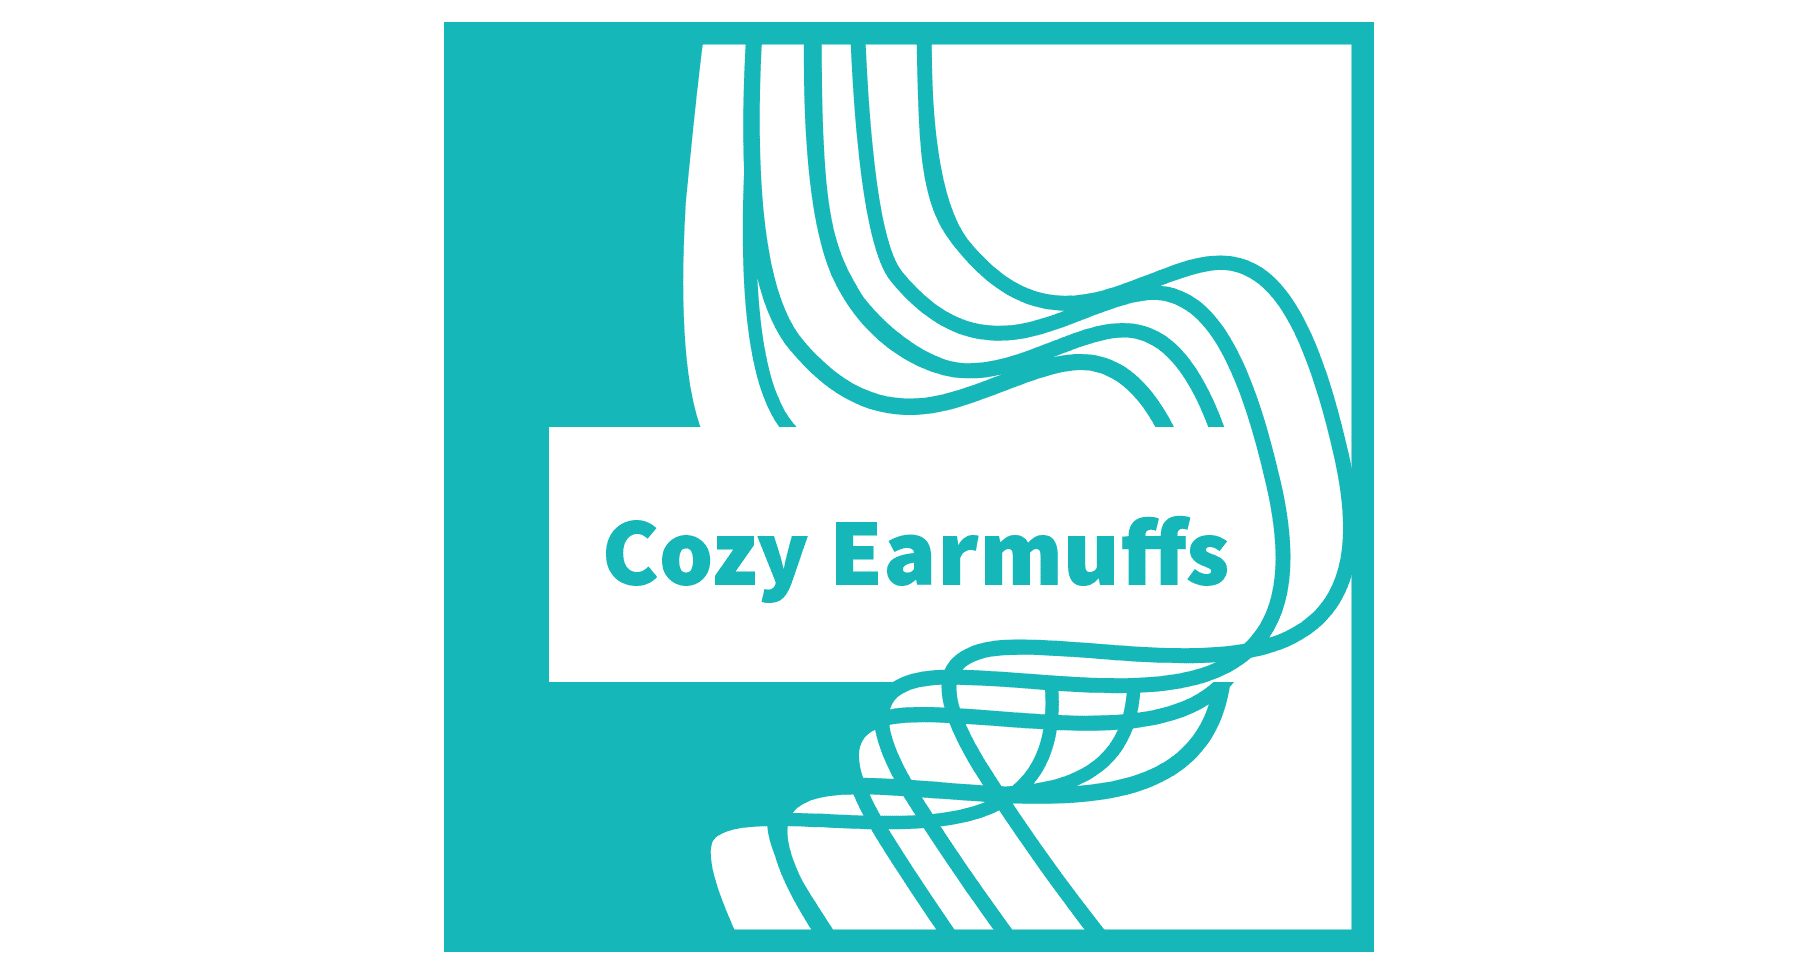 Cozy Earmuffs